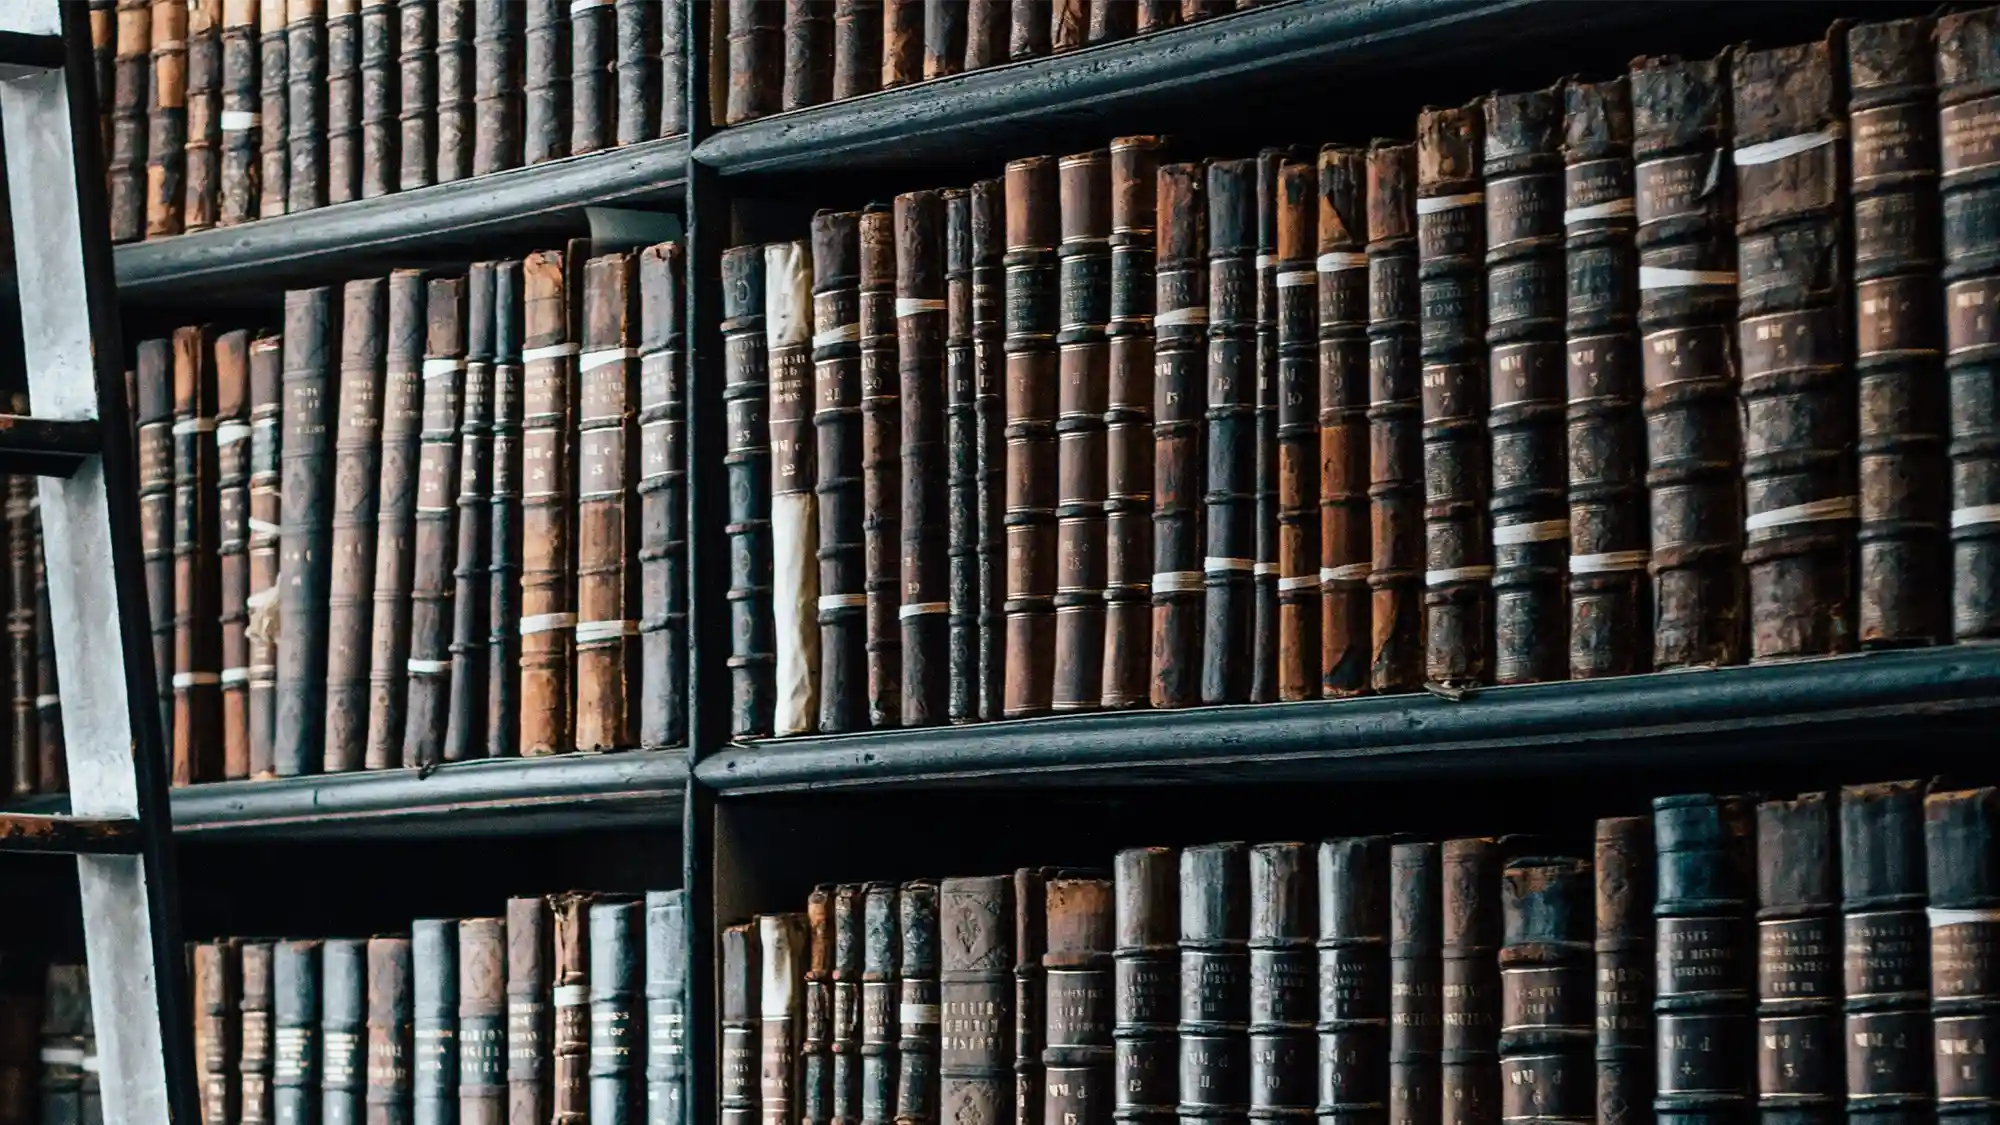 Photo of bookshelf via Pixabay